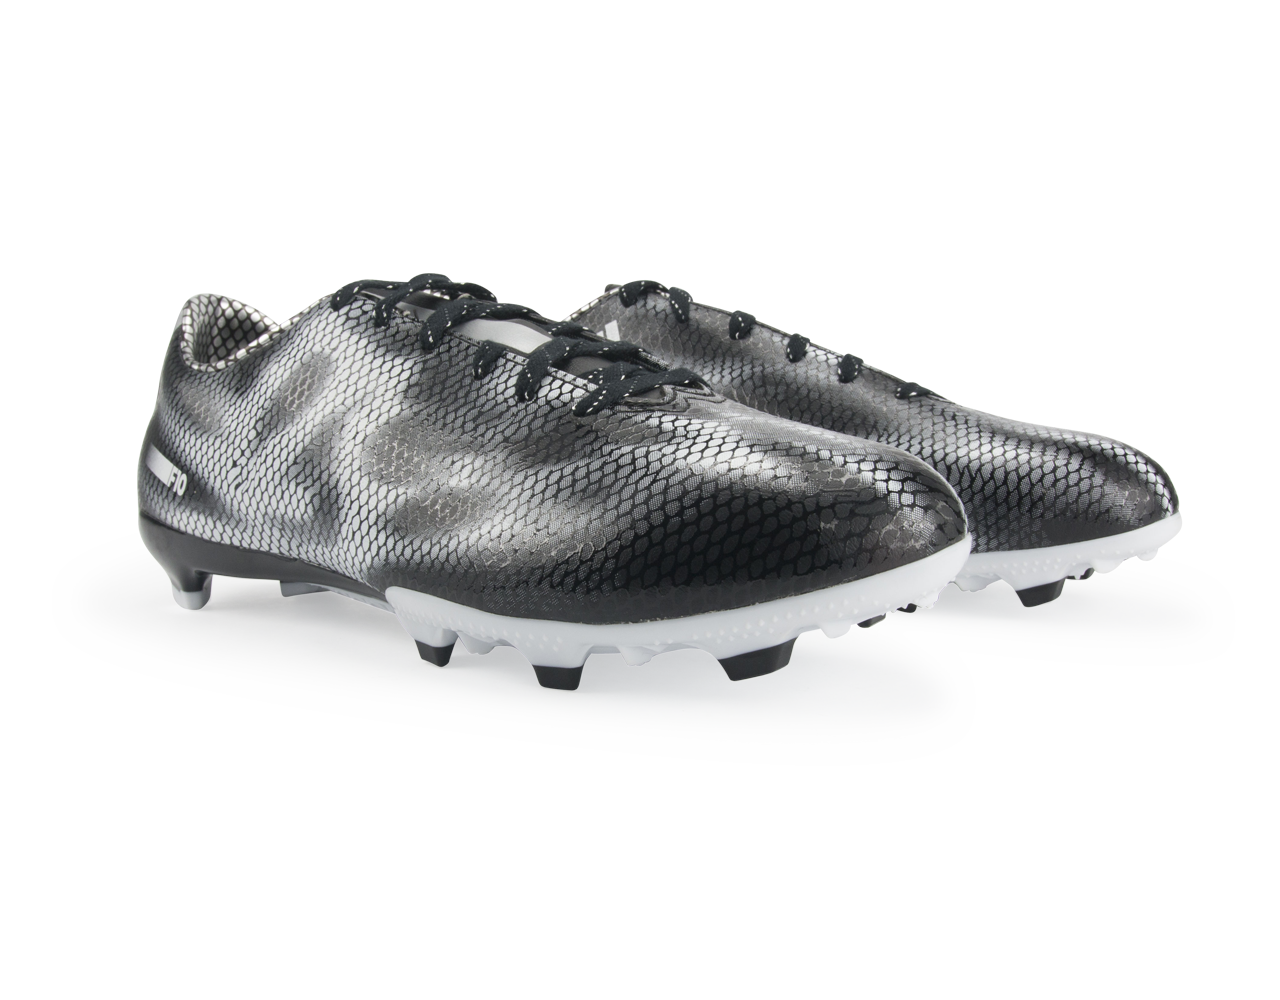 adidas Men's F10 FG Black/Silver